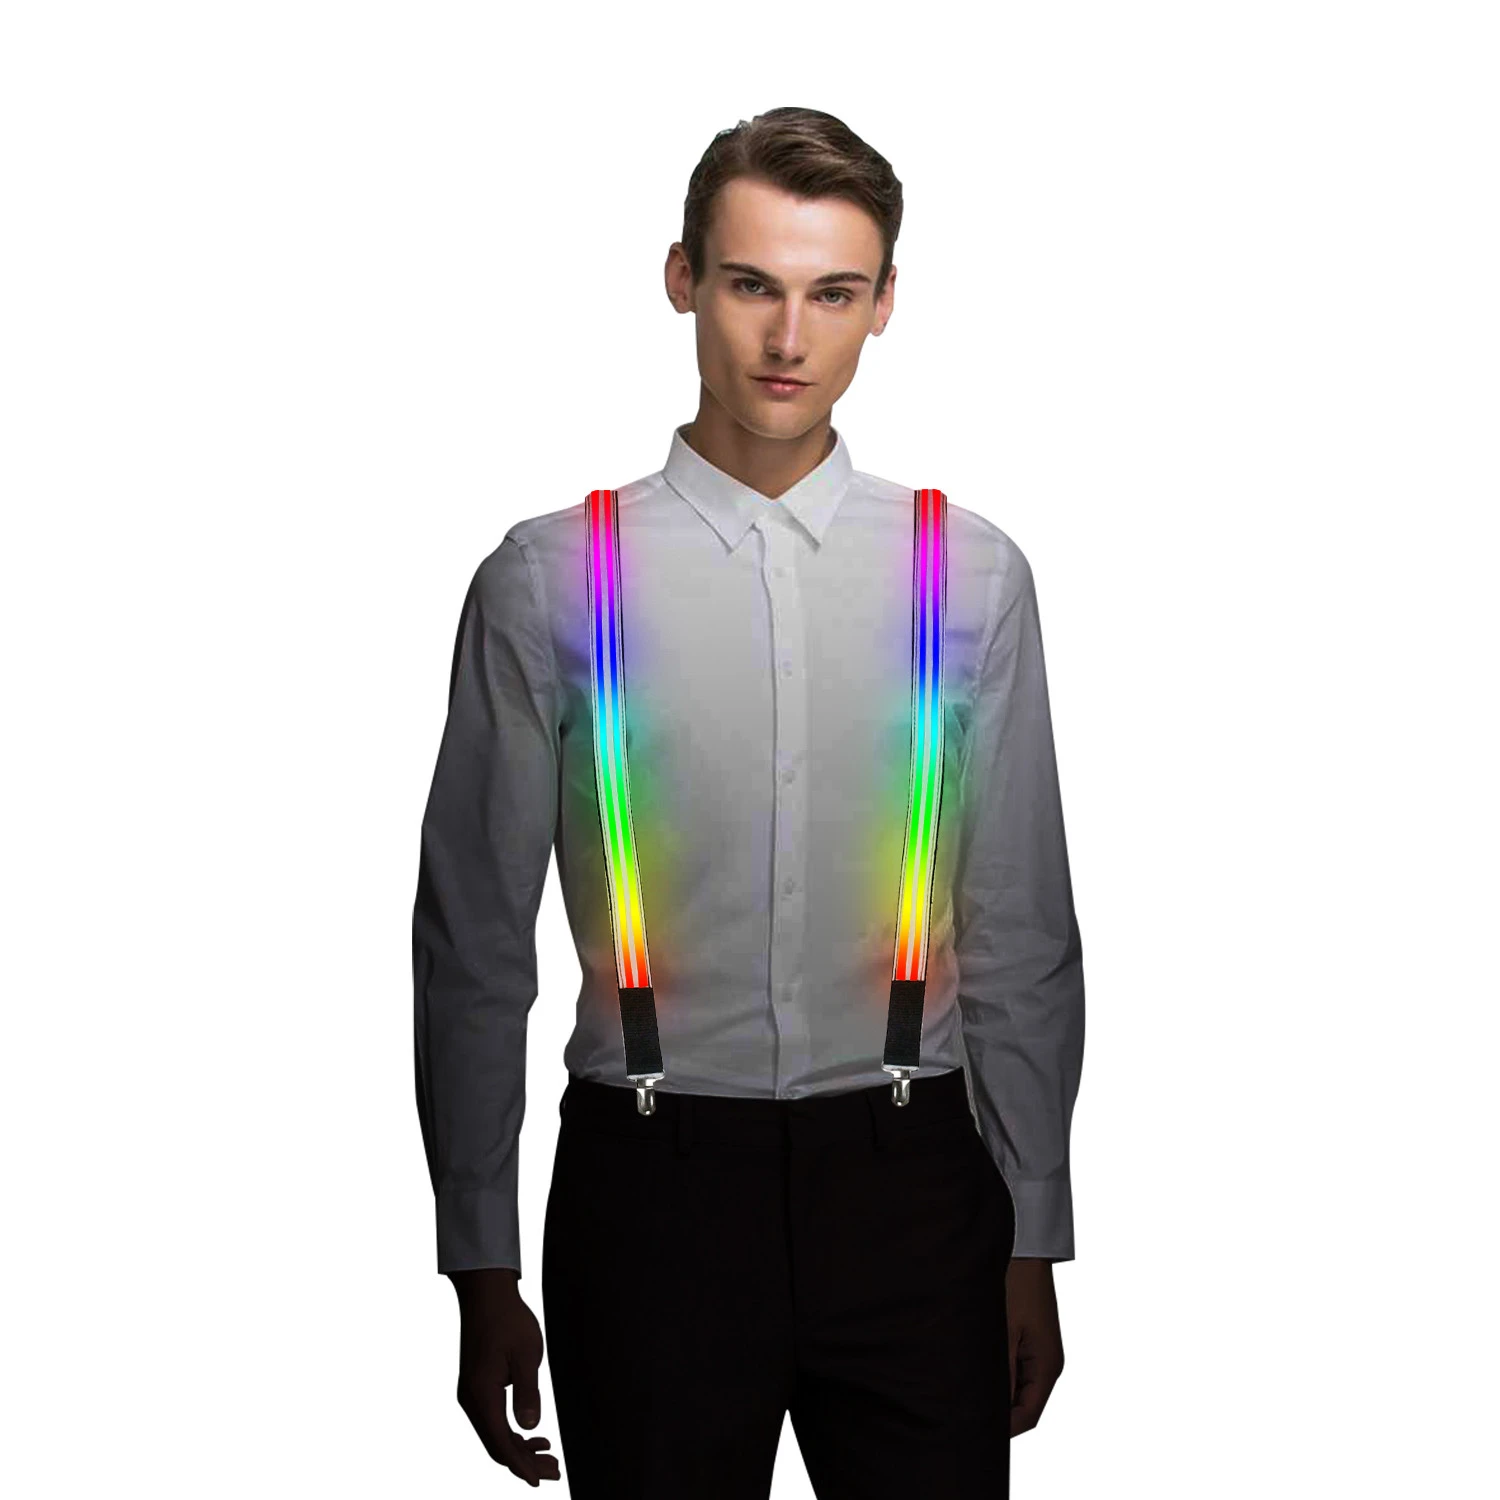 Amazon Hot Seller Light up Double Strip LED Suspenders Belt Wholesale High Quality Led Suspender for Party 50-80 Hours Morlight